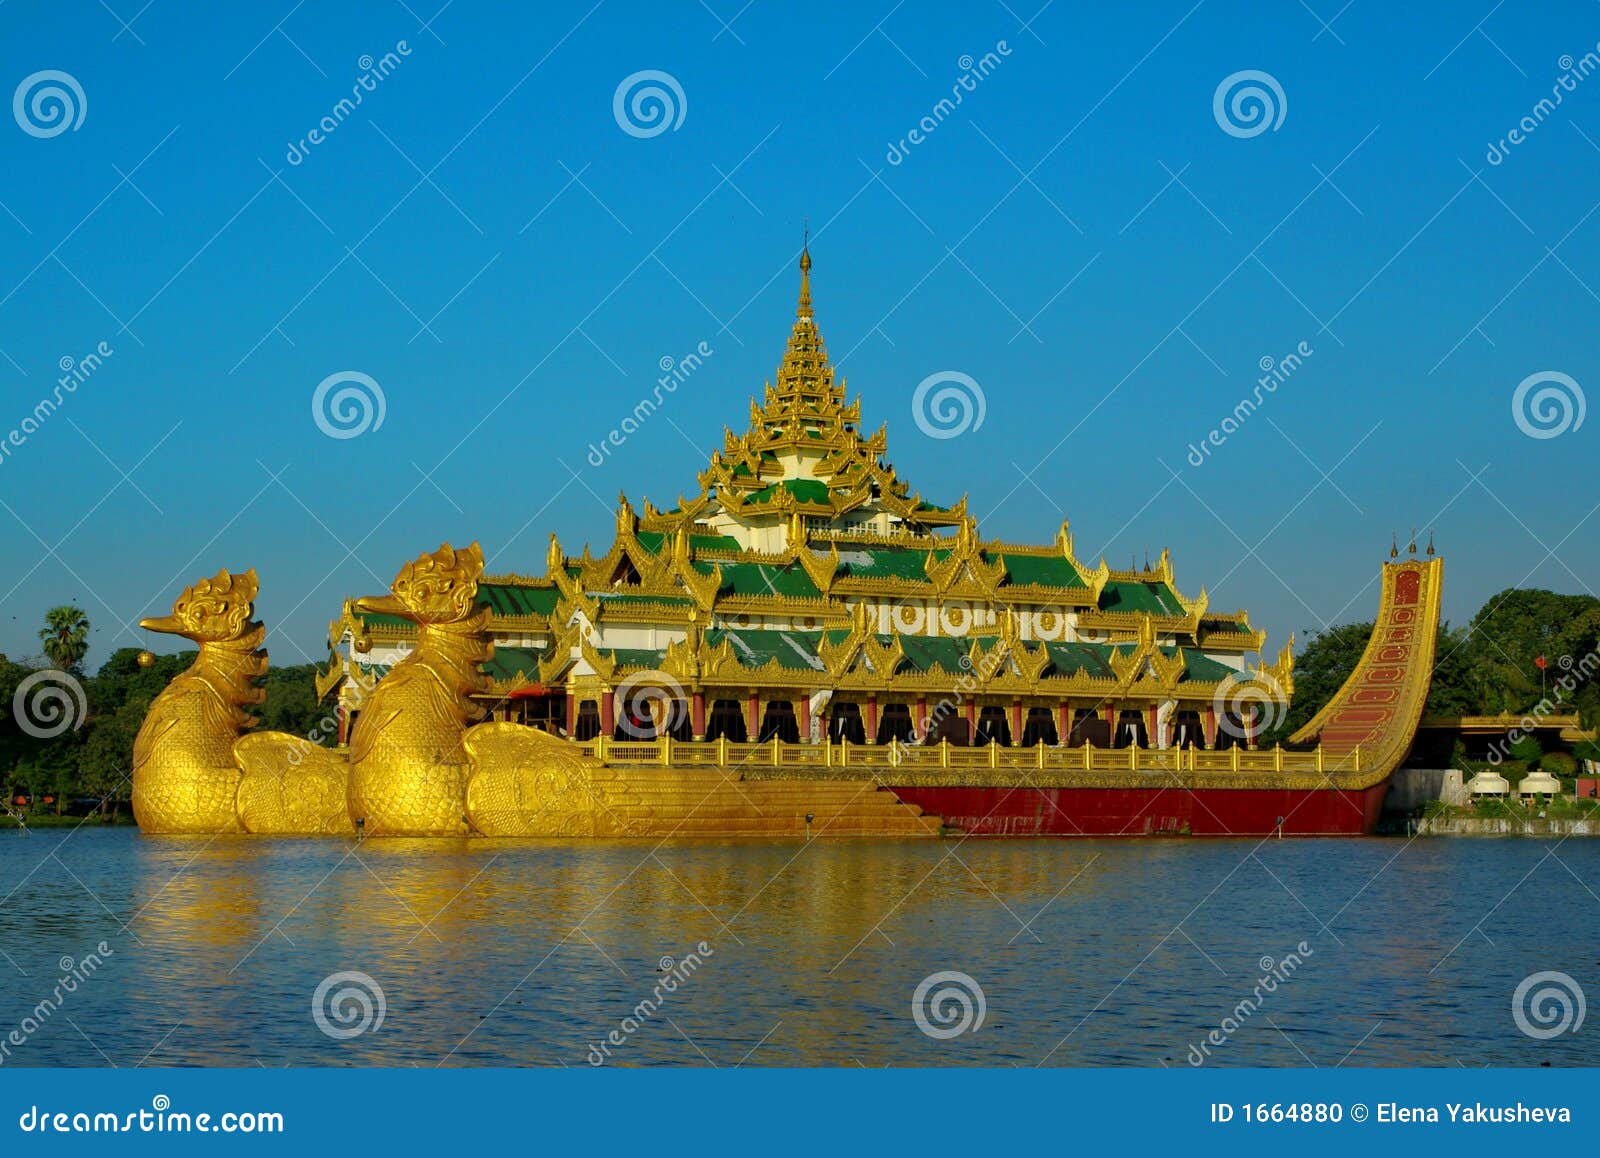 karaweik palace in yangon, myanmar